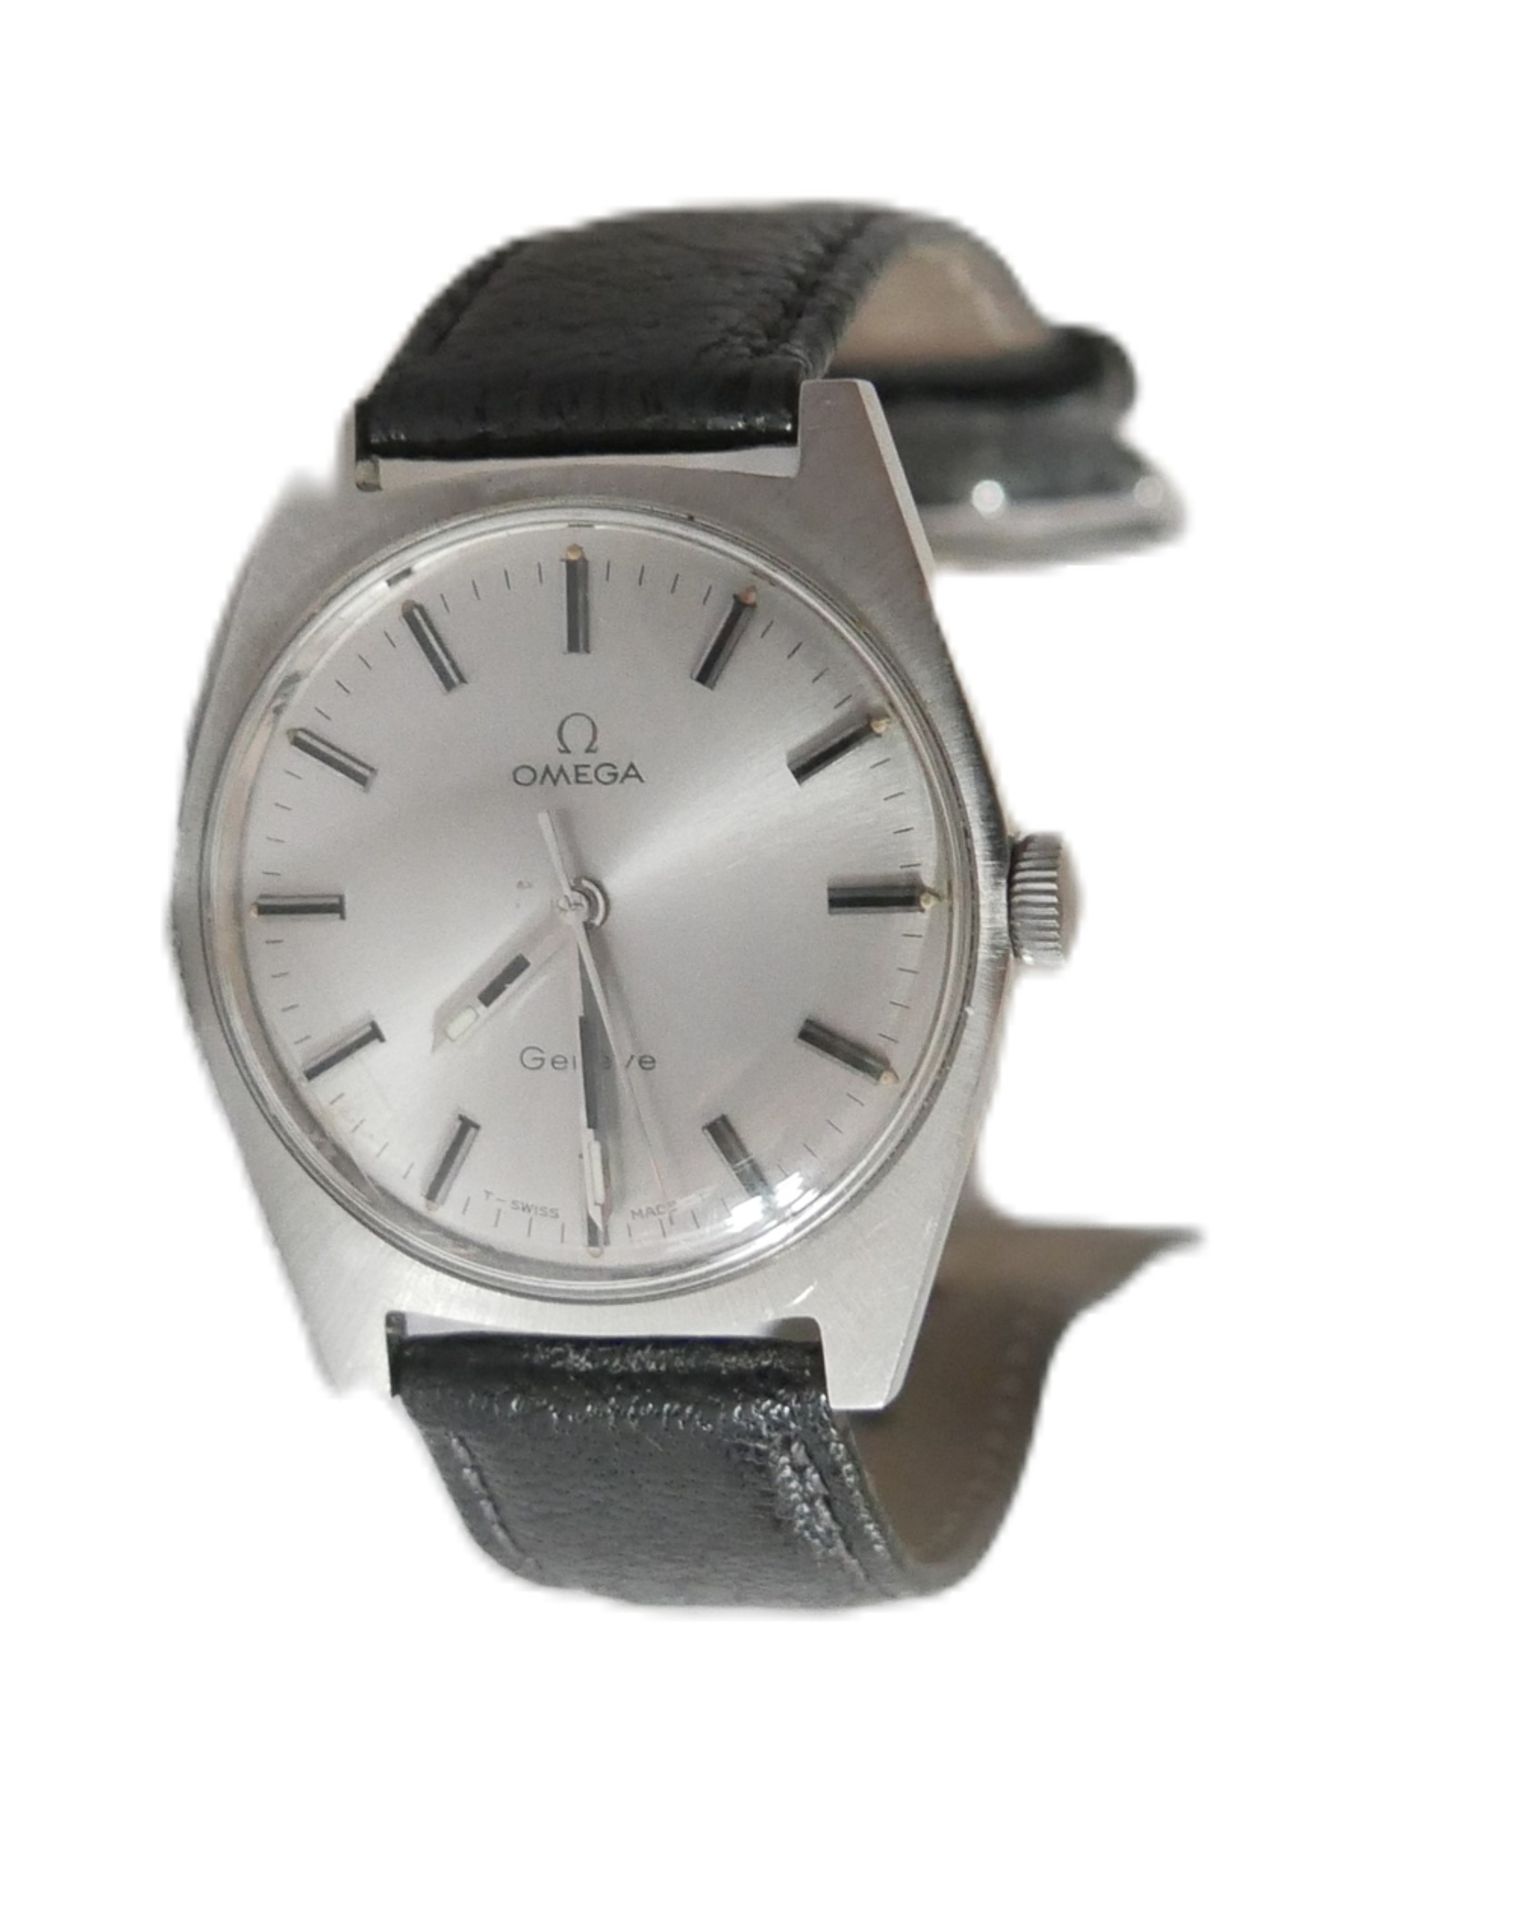 Herren Armbanduhren "Omega Geneve Stahl Vintage" Handaufzug, guter getragener Zustand. Funktion